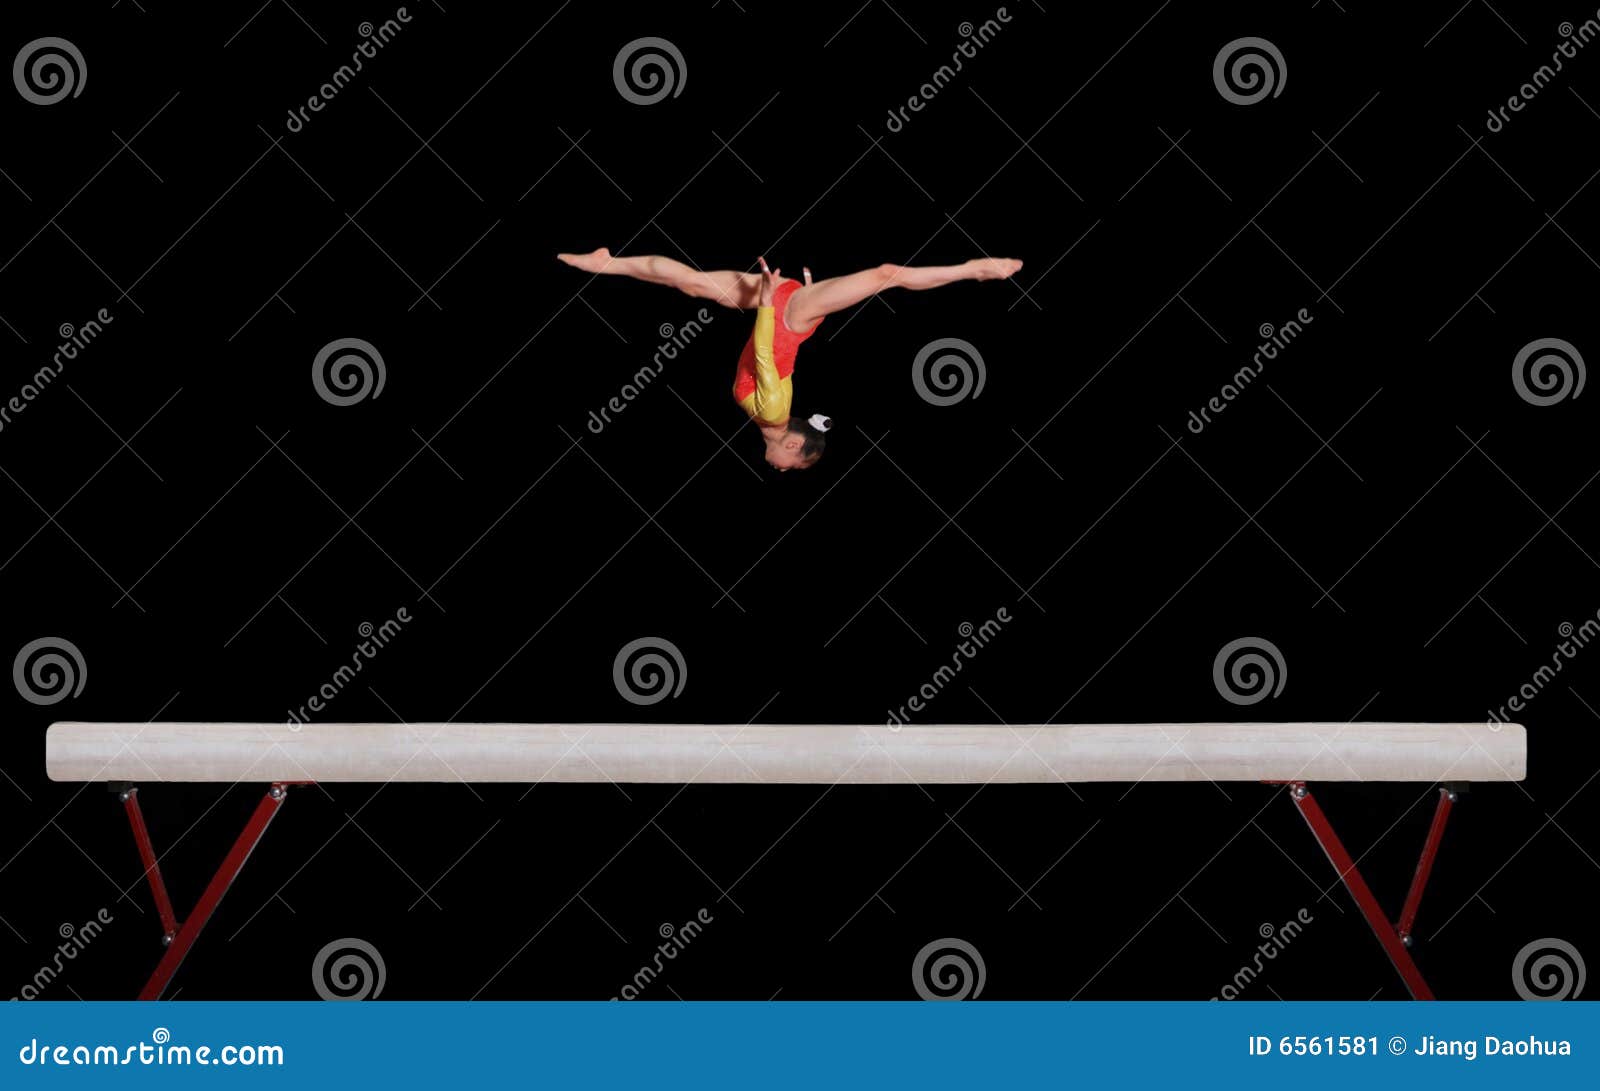 UBesGoo 7' Sectional Gymnastics Floor Folding Balance Beam, for Donkey  Kicks/Handstands, Jumps, Leaps, Gym or Home Training - Walmart.com